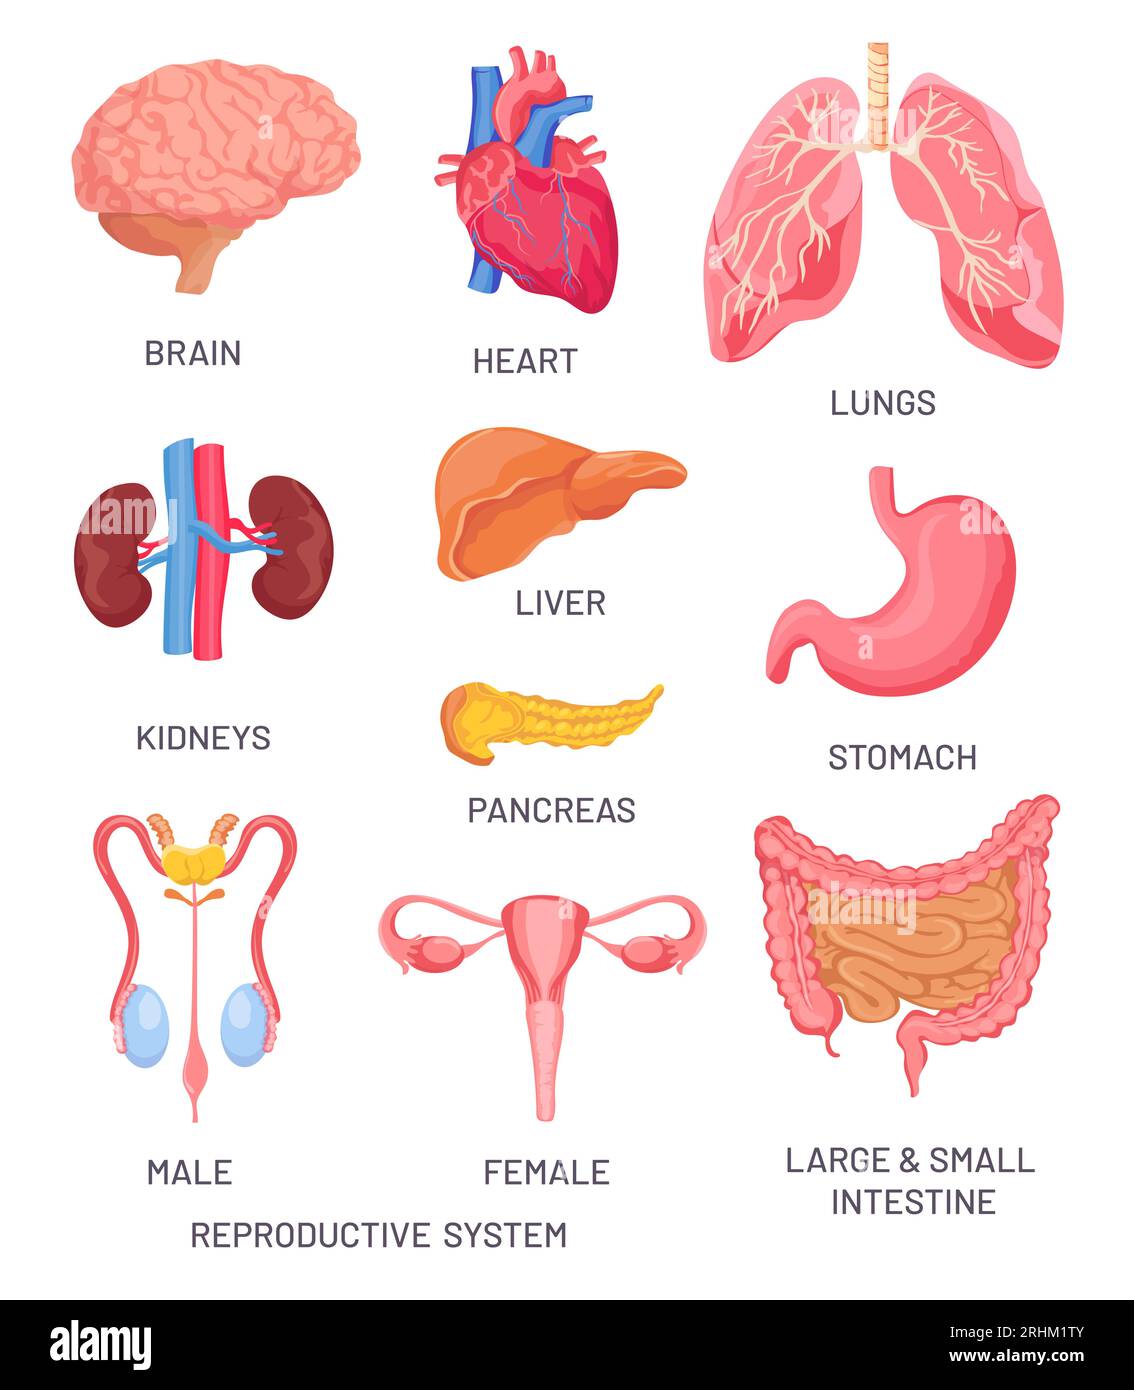 Human internal organs iconset by Alex Oakenman on @creativemarket | Medical  drawings, Biology drawing, Medical school essentials